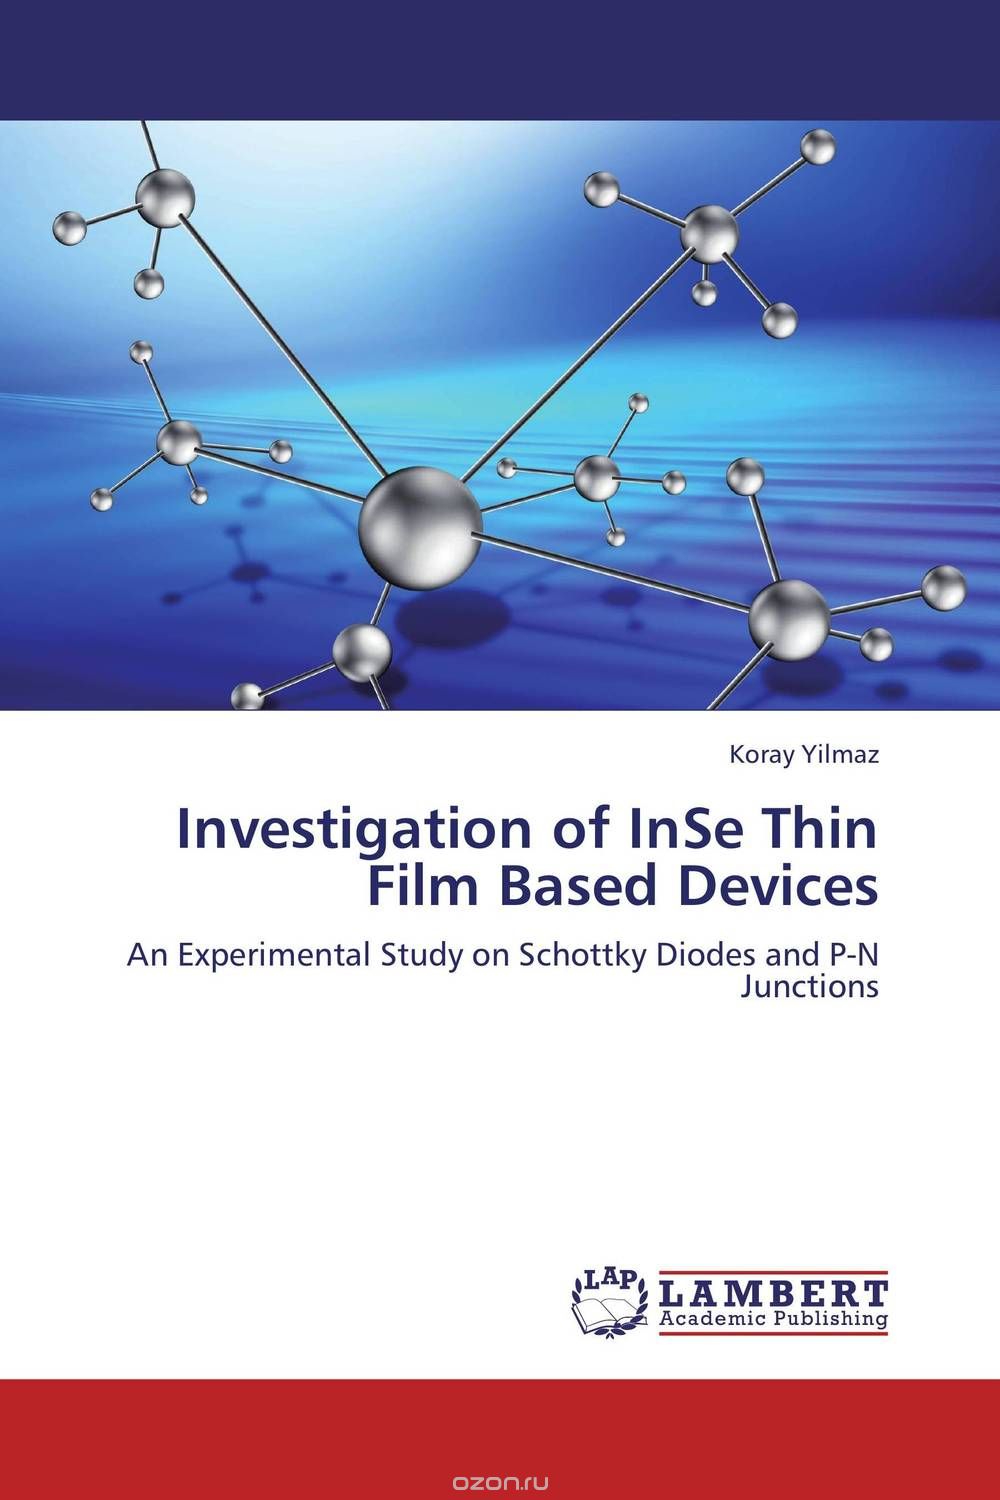 Скачать книгу "Investigation of InSe Thin Film Based Devices"